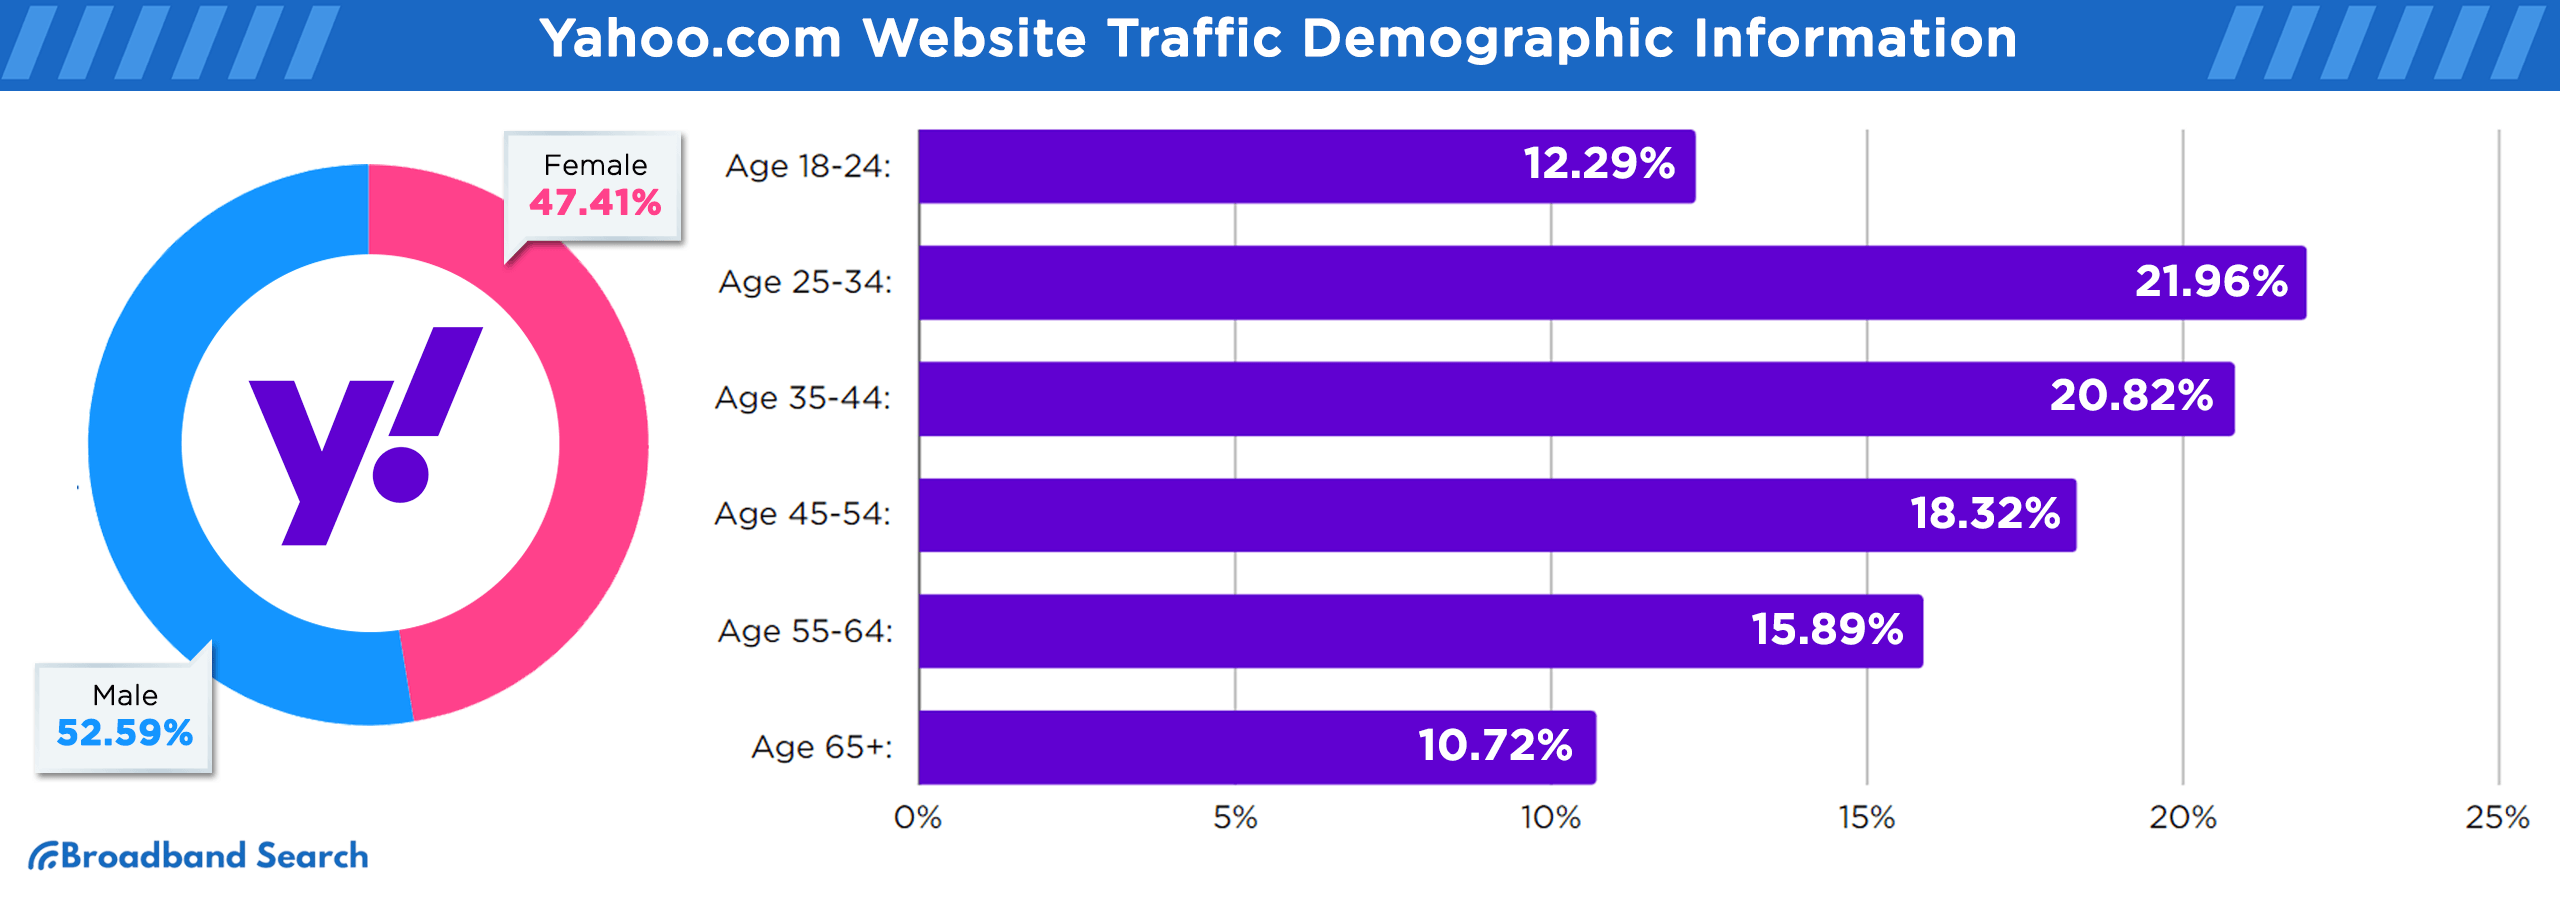 Website traffic demograpgic information for Yahoo.com